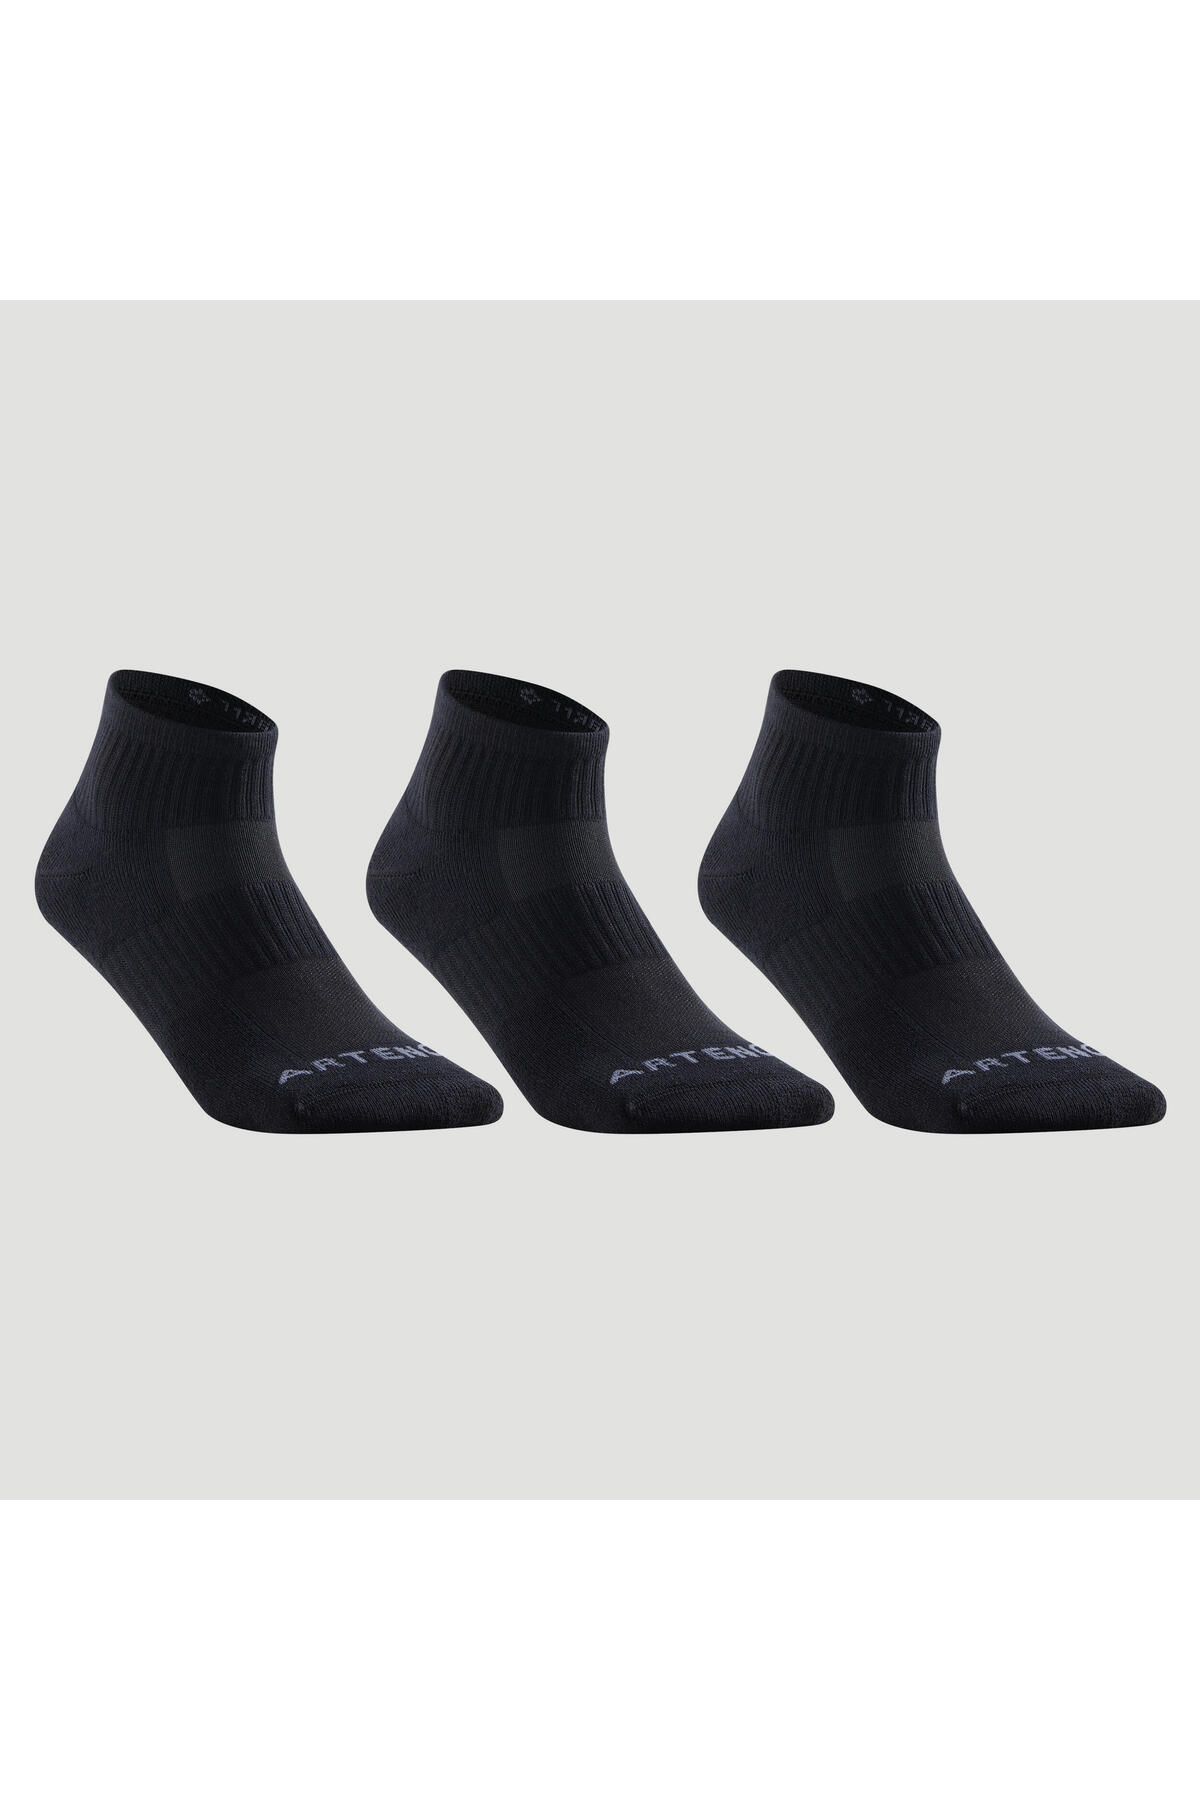 Decathlon ARTENGO Spor Çorabı - Orta Boy Konçlu - 3 Çift - Siyah - RS500 Mid